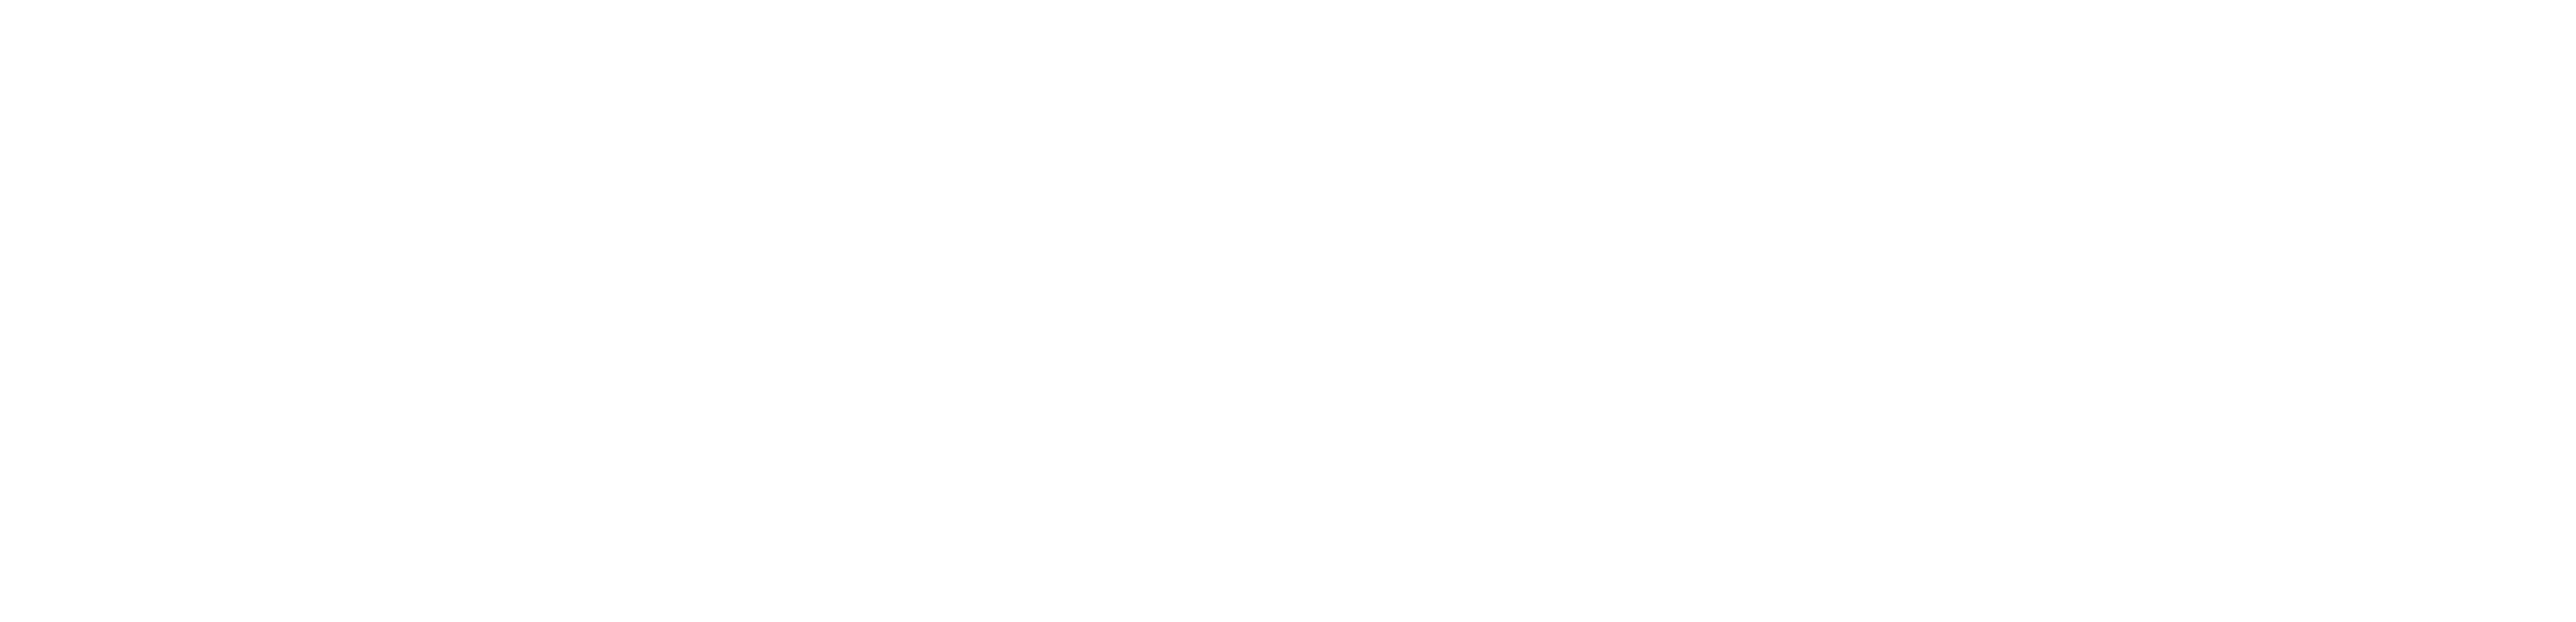 Twin Cities PBS TPTNow